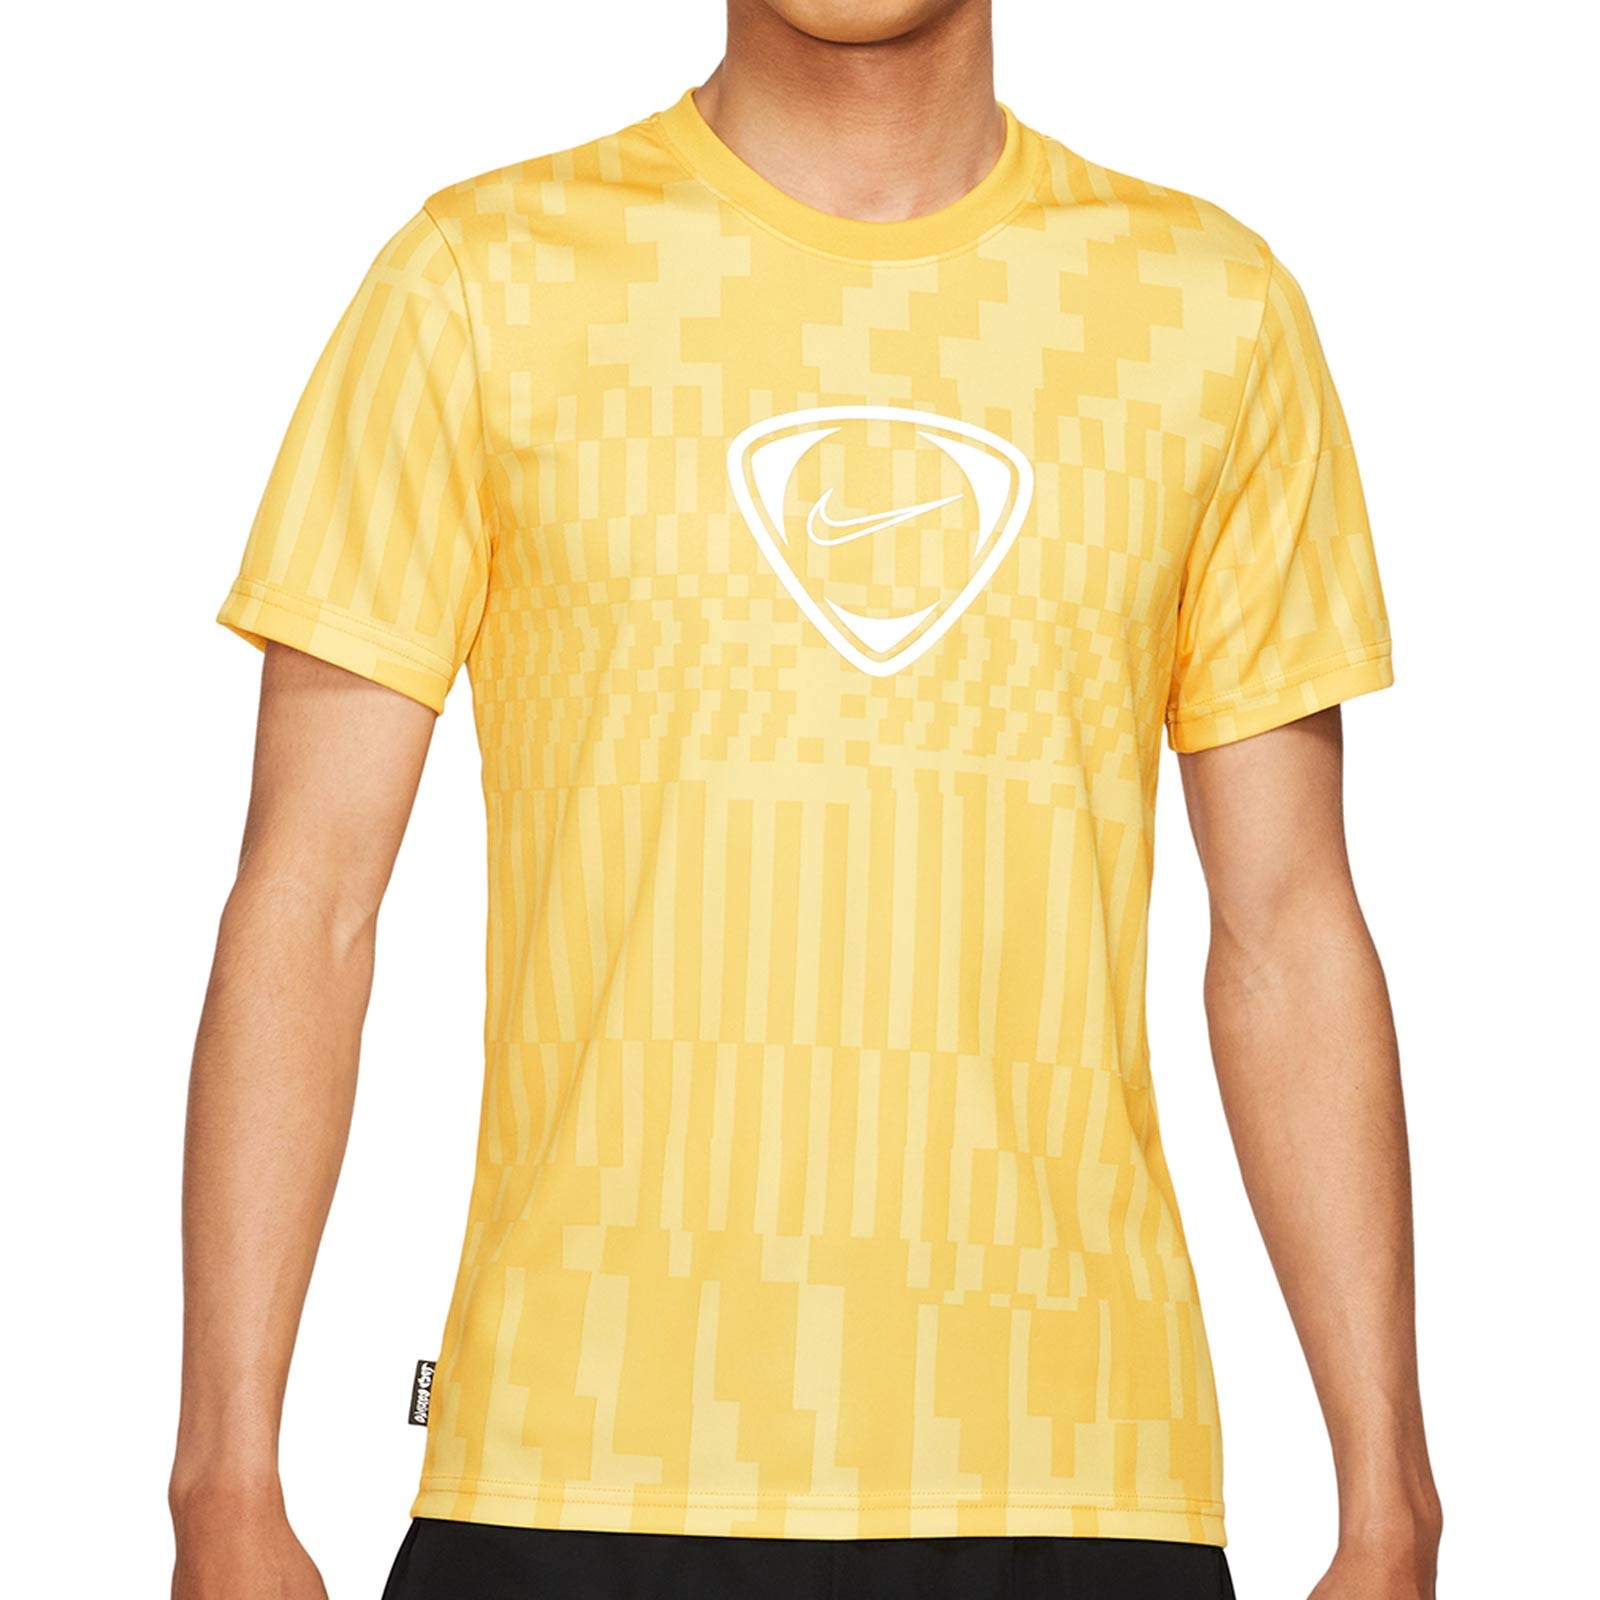 Camiseta Dry Academy Joga Bonito dorada |